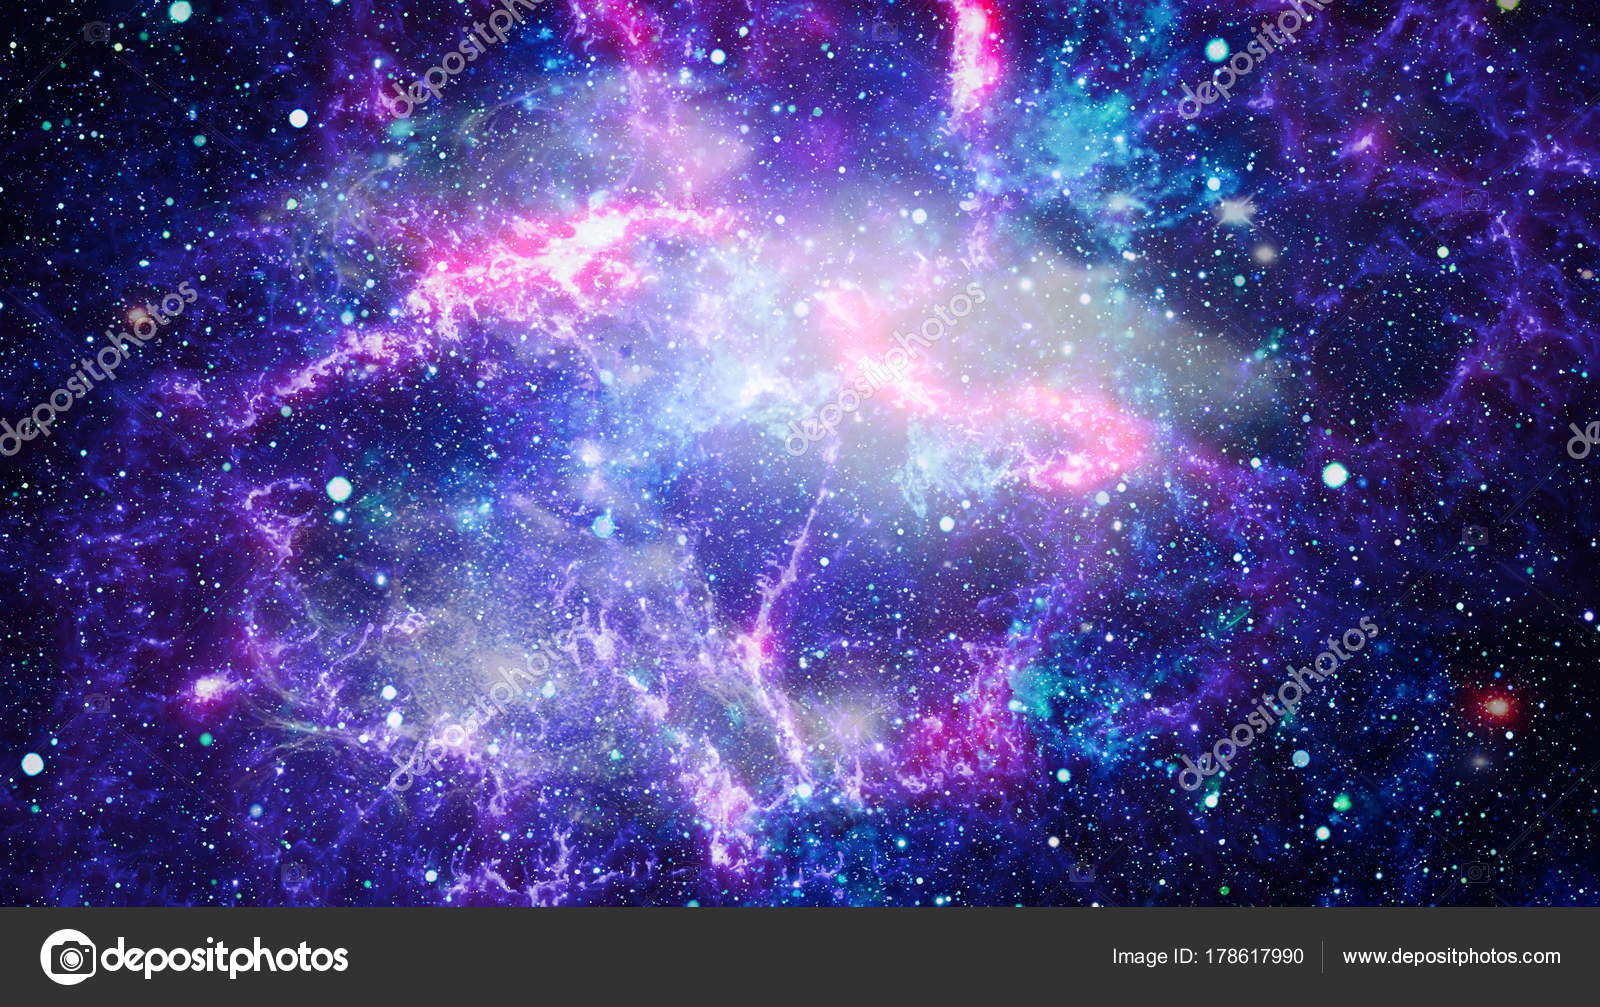 https://st3.depositphotos.com/1052205/17861/i/1600/depositphotos_178617990-stock-photo-planets-stars-galaxies-outer-space.jpg